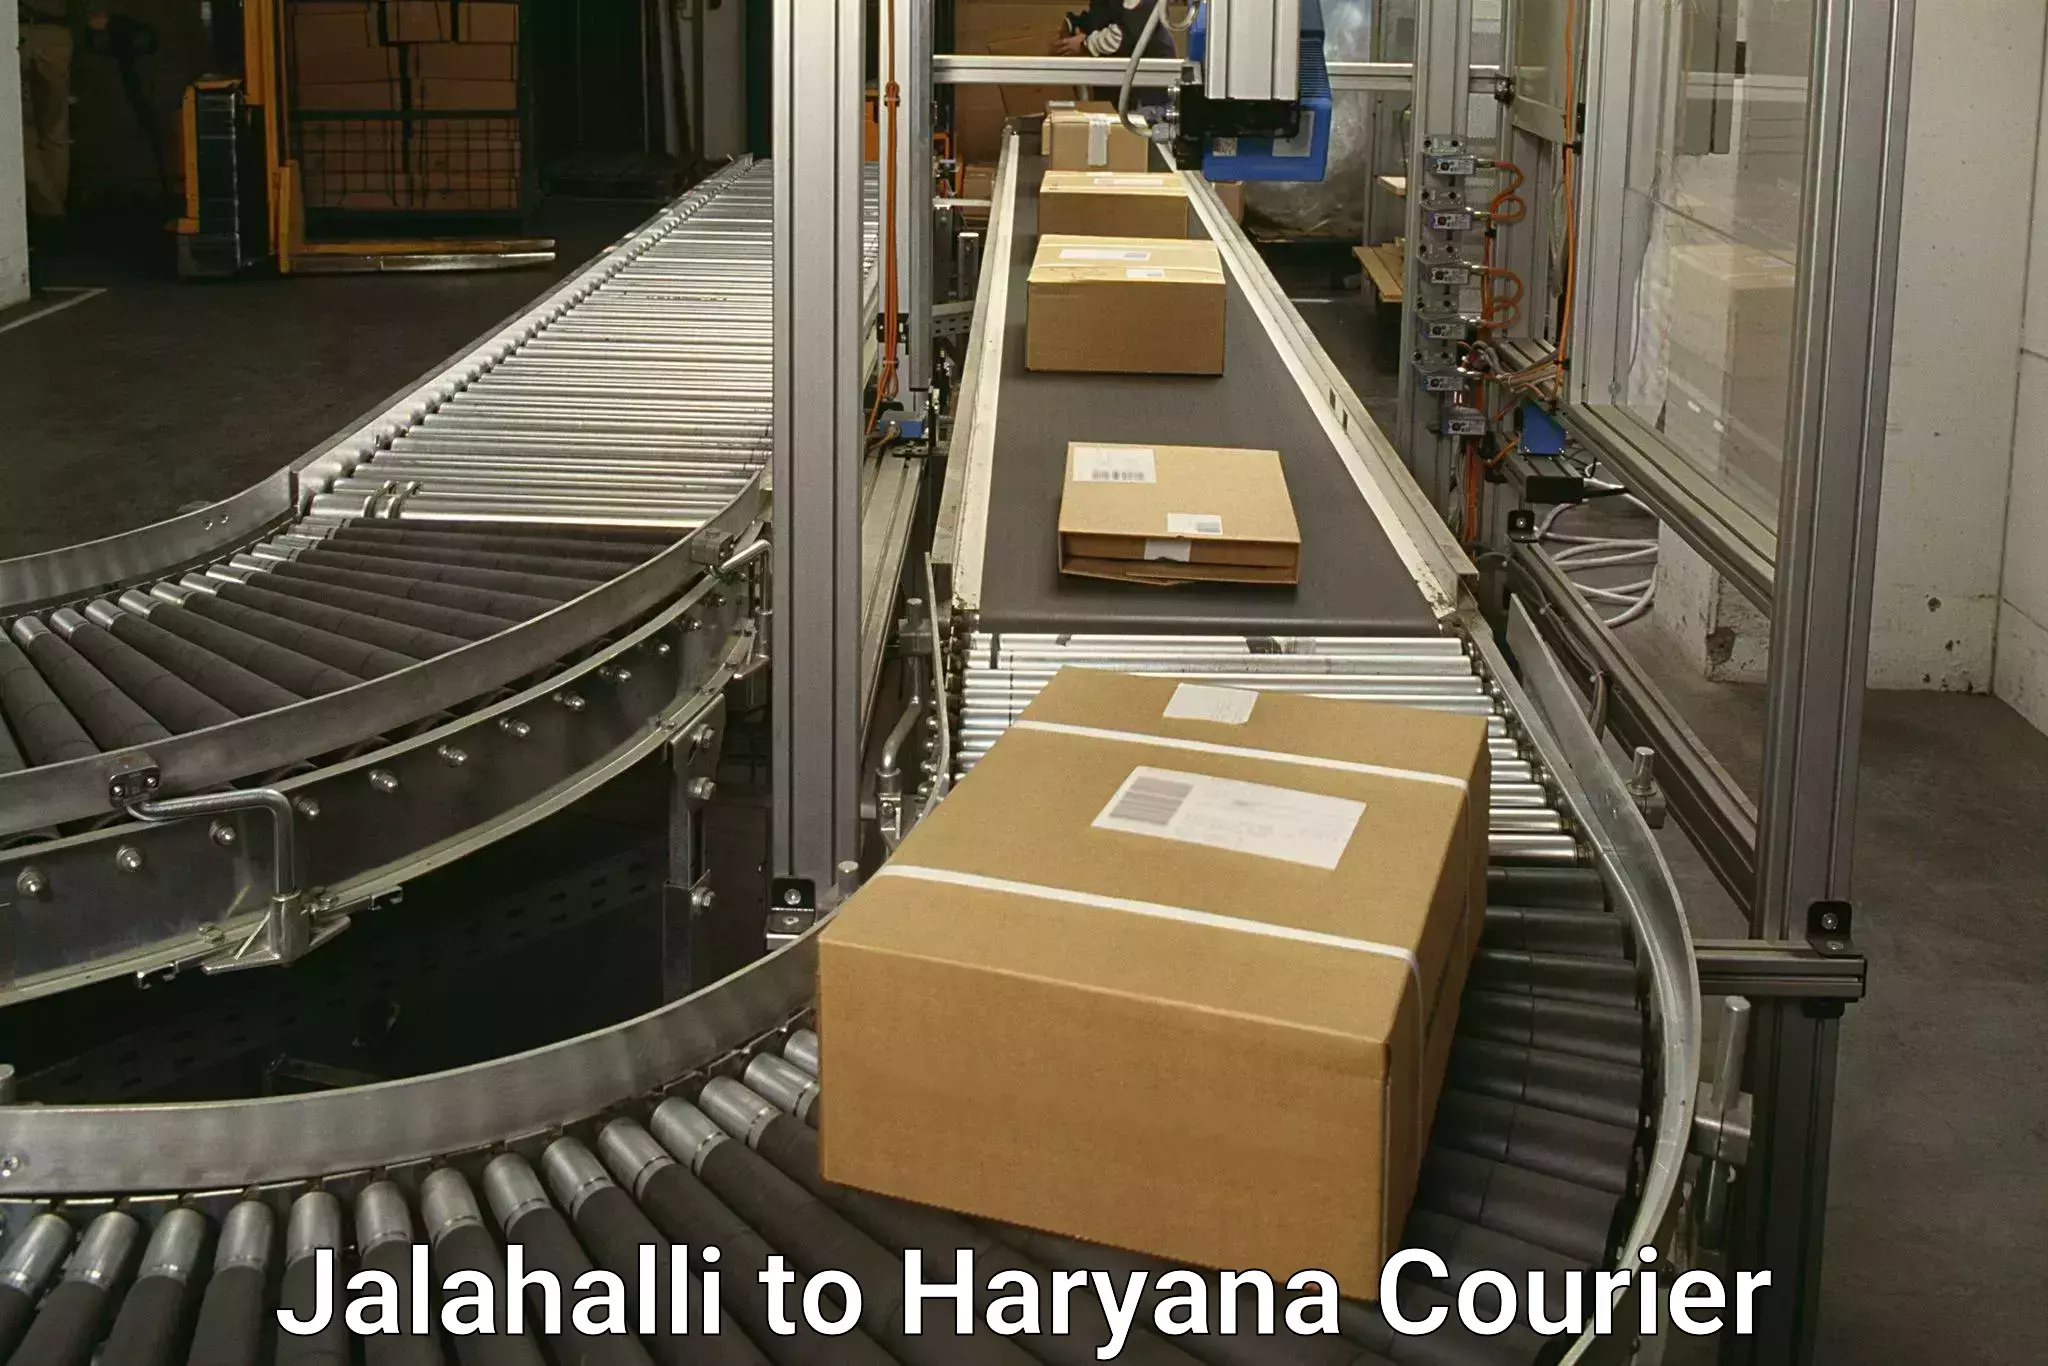 Doorstep delivery service Jalahalli to NCR Haryana